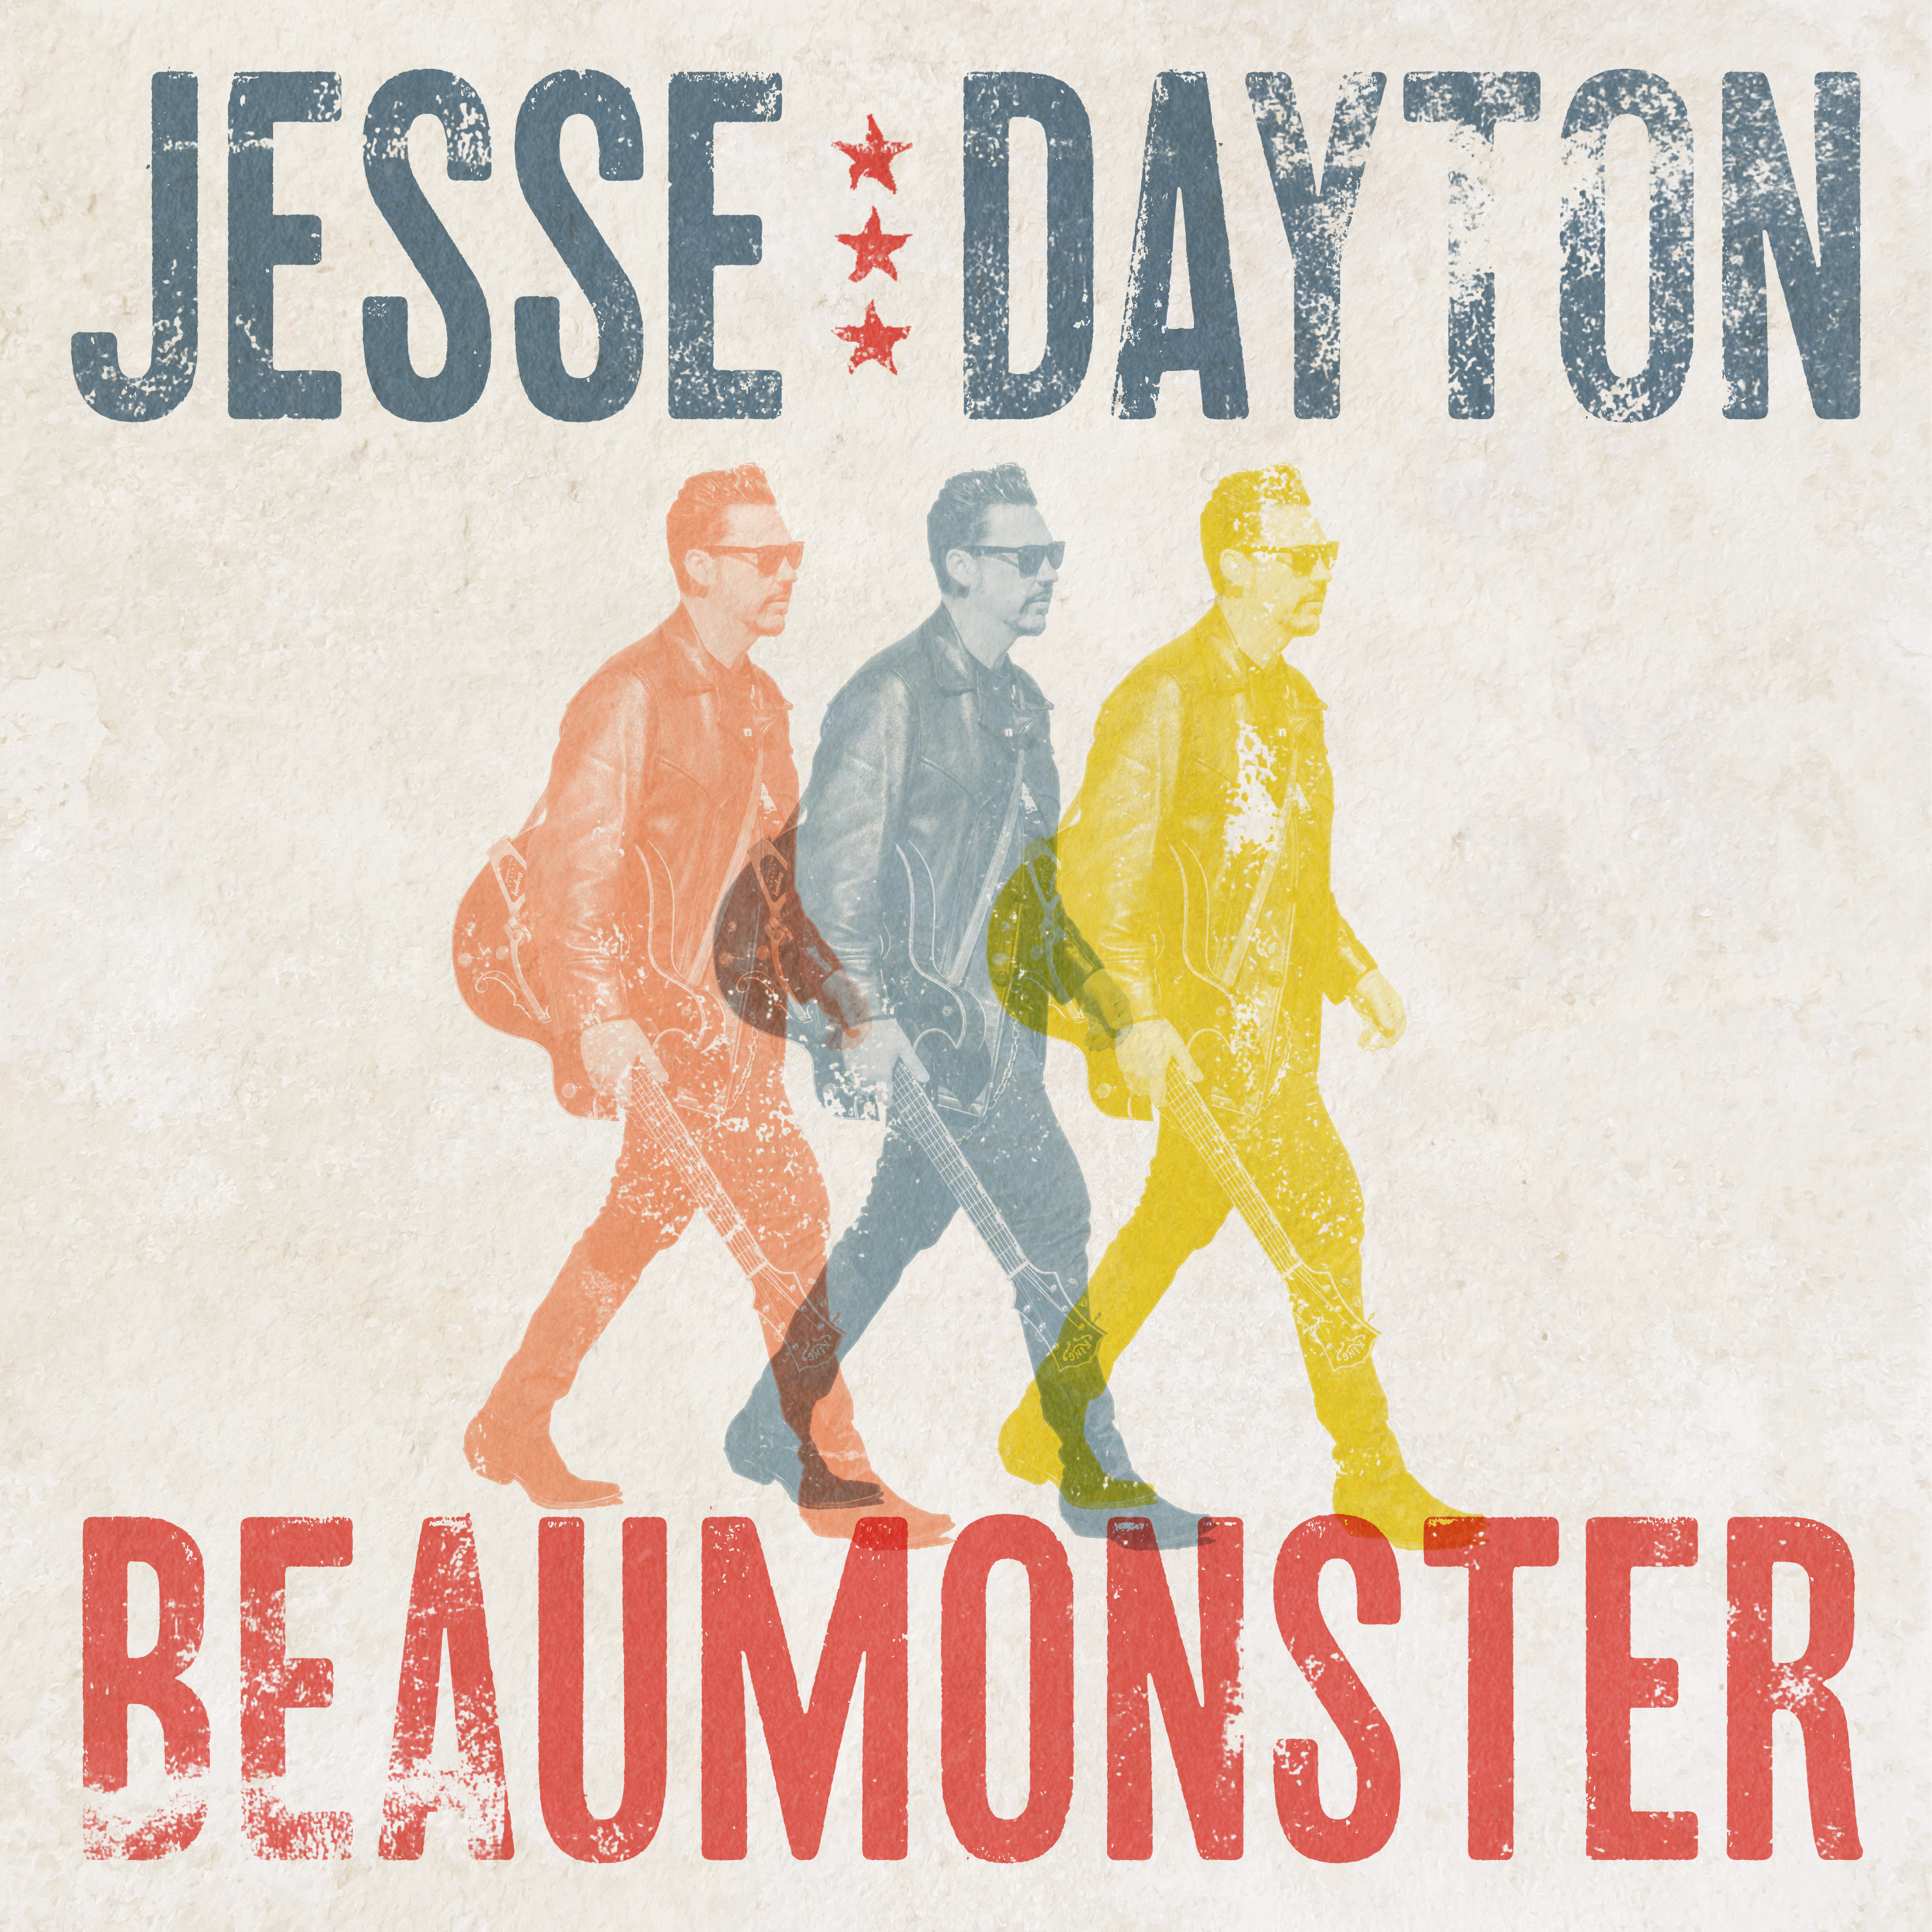 JESSE DAYTON Releases his debut memoir BEAUMONSTER